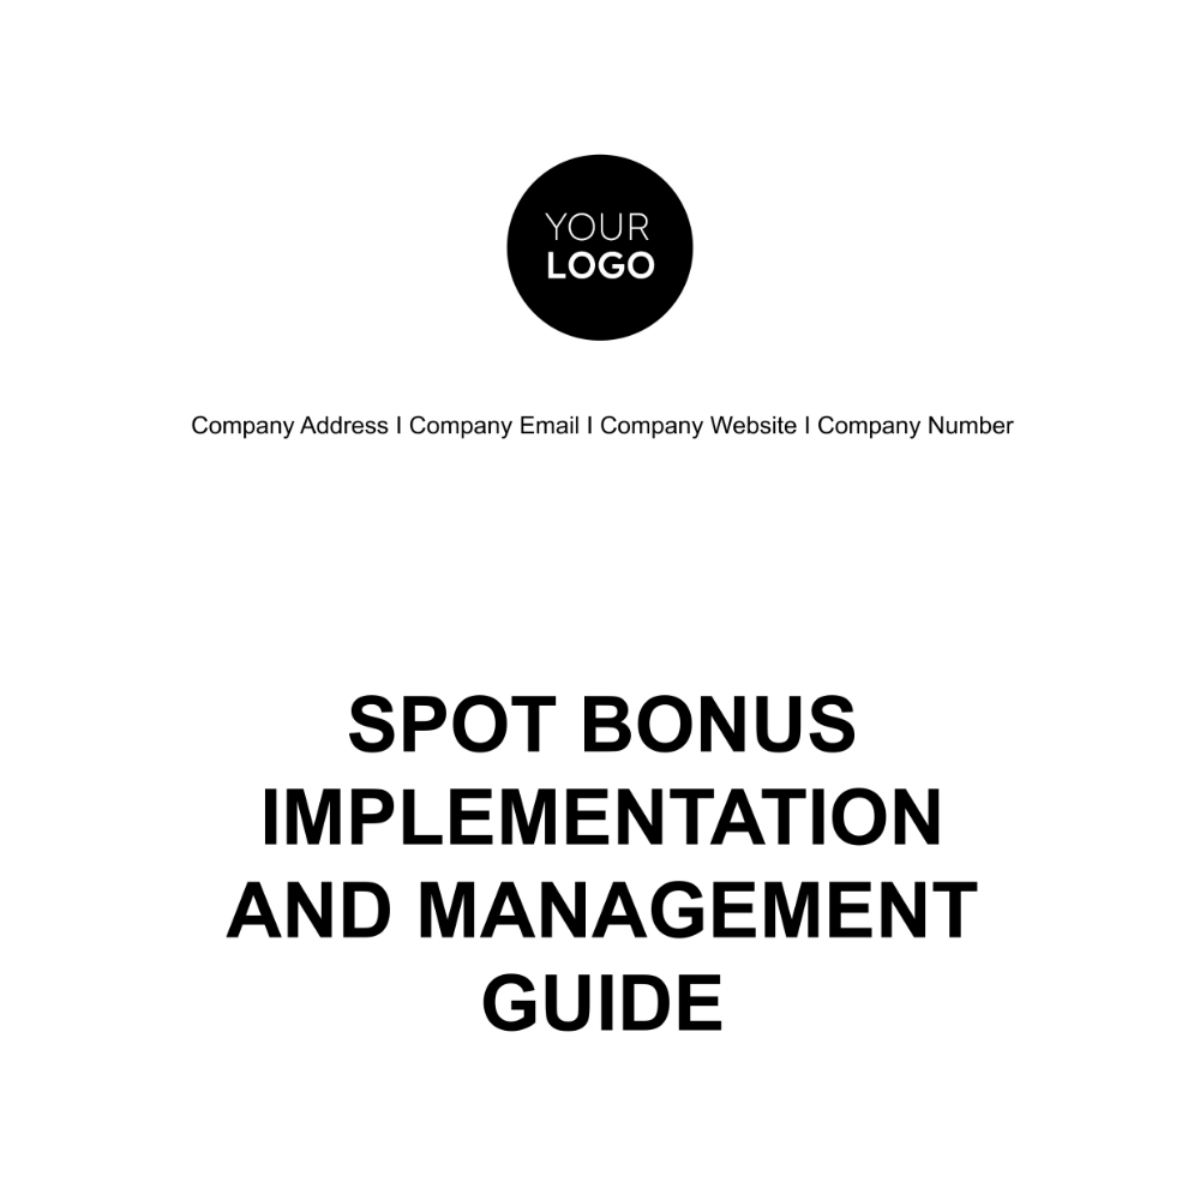 Spot Bonus Implementation and Management Guide HR Template